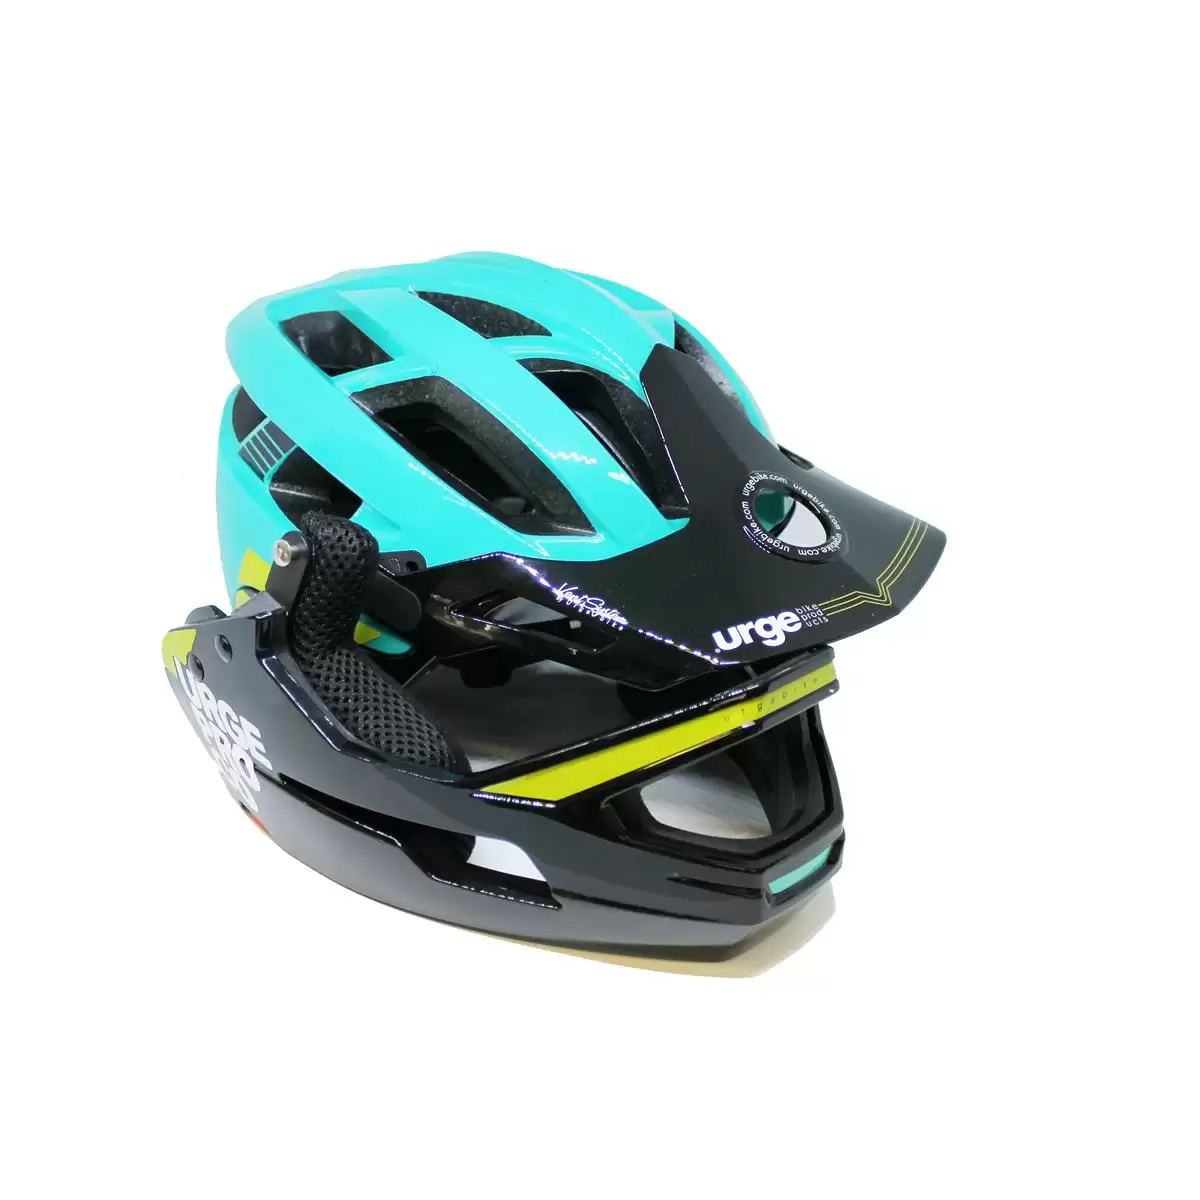 Full face helmet Gringo de la Pampa light blue size L/XL (58-61) #4